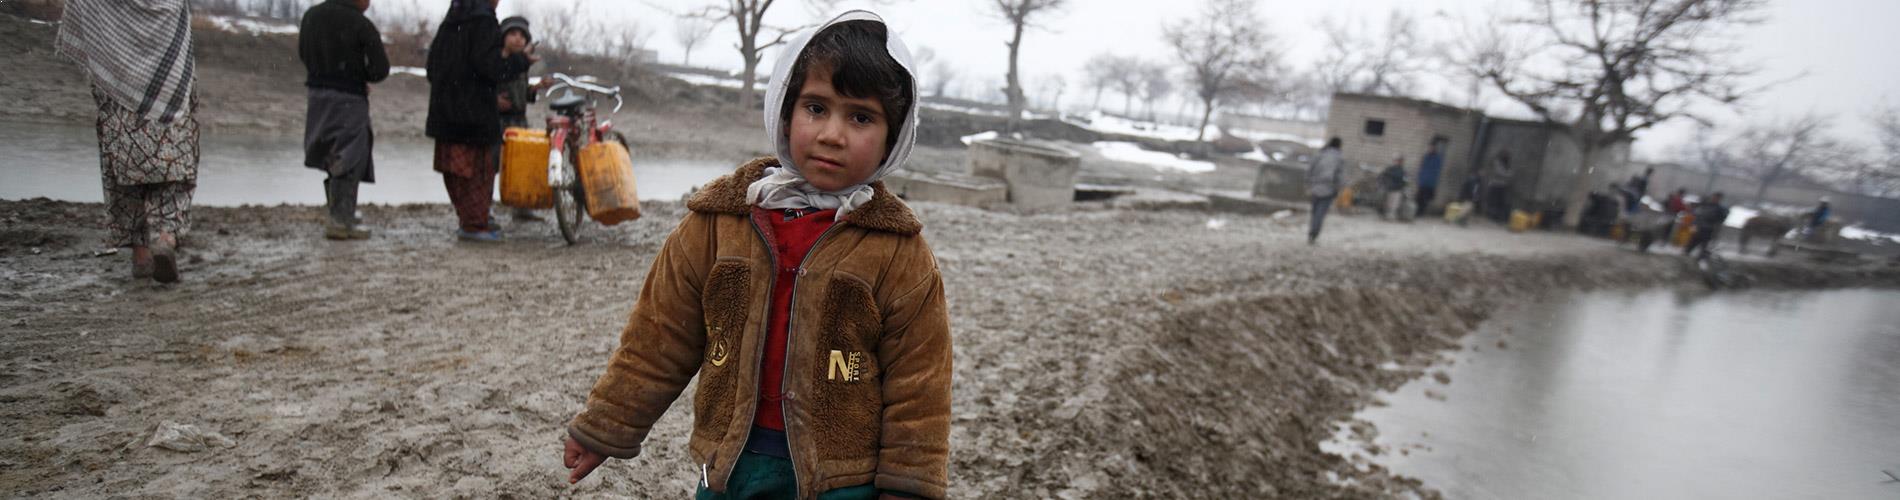 enfant boue bidon Afghanistan